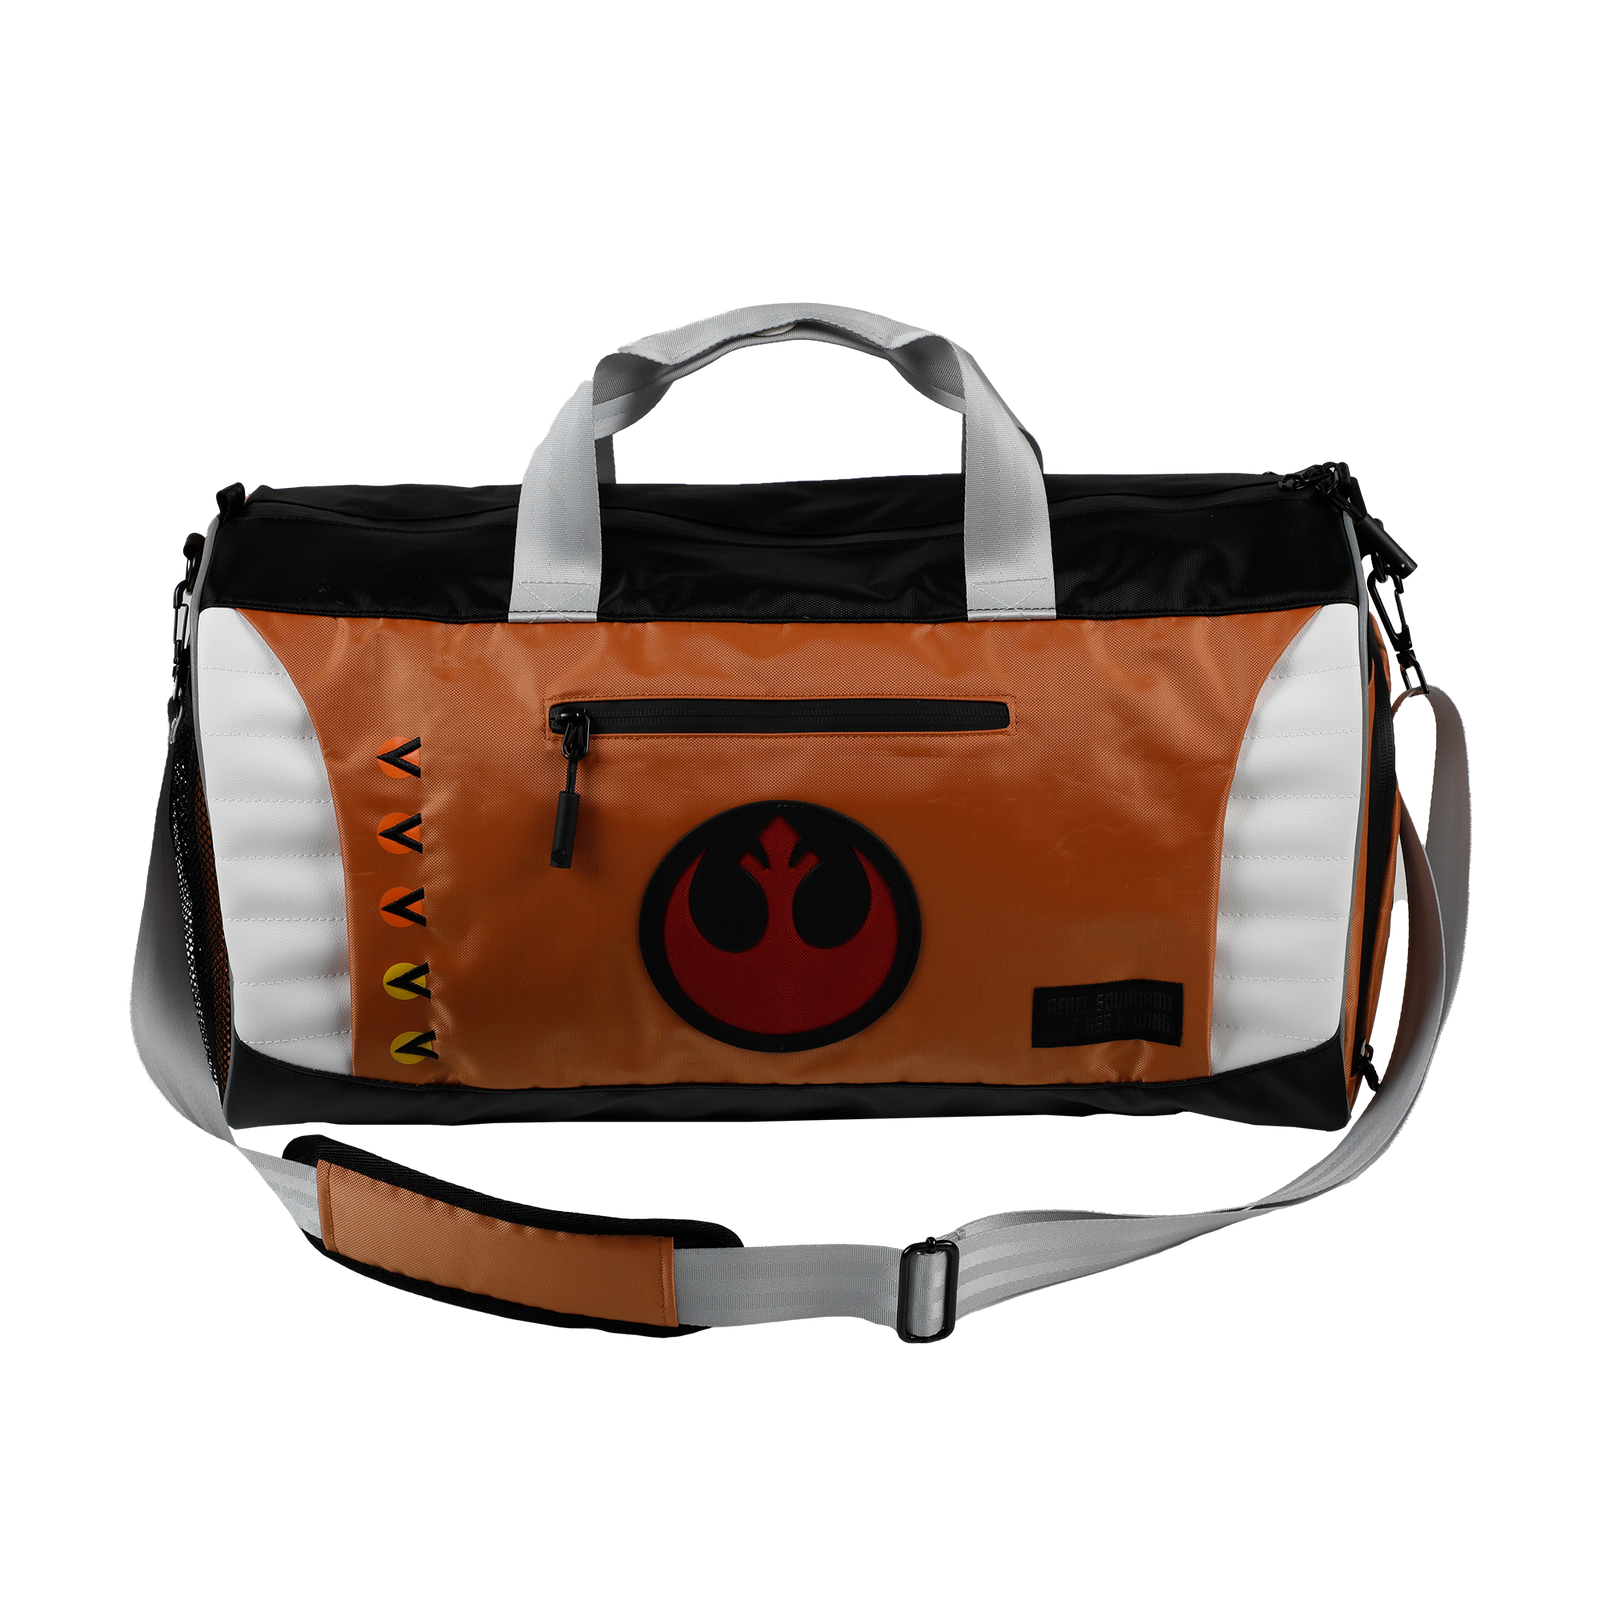 rebel alliance travel bag